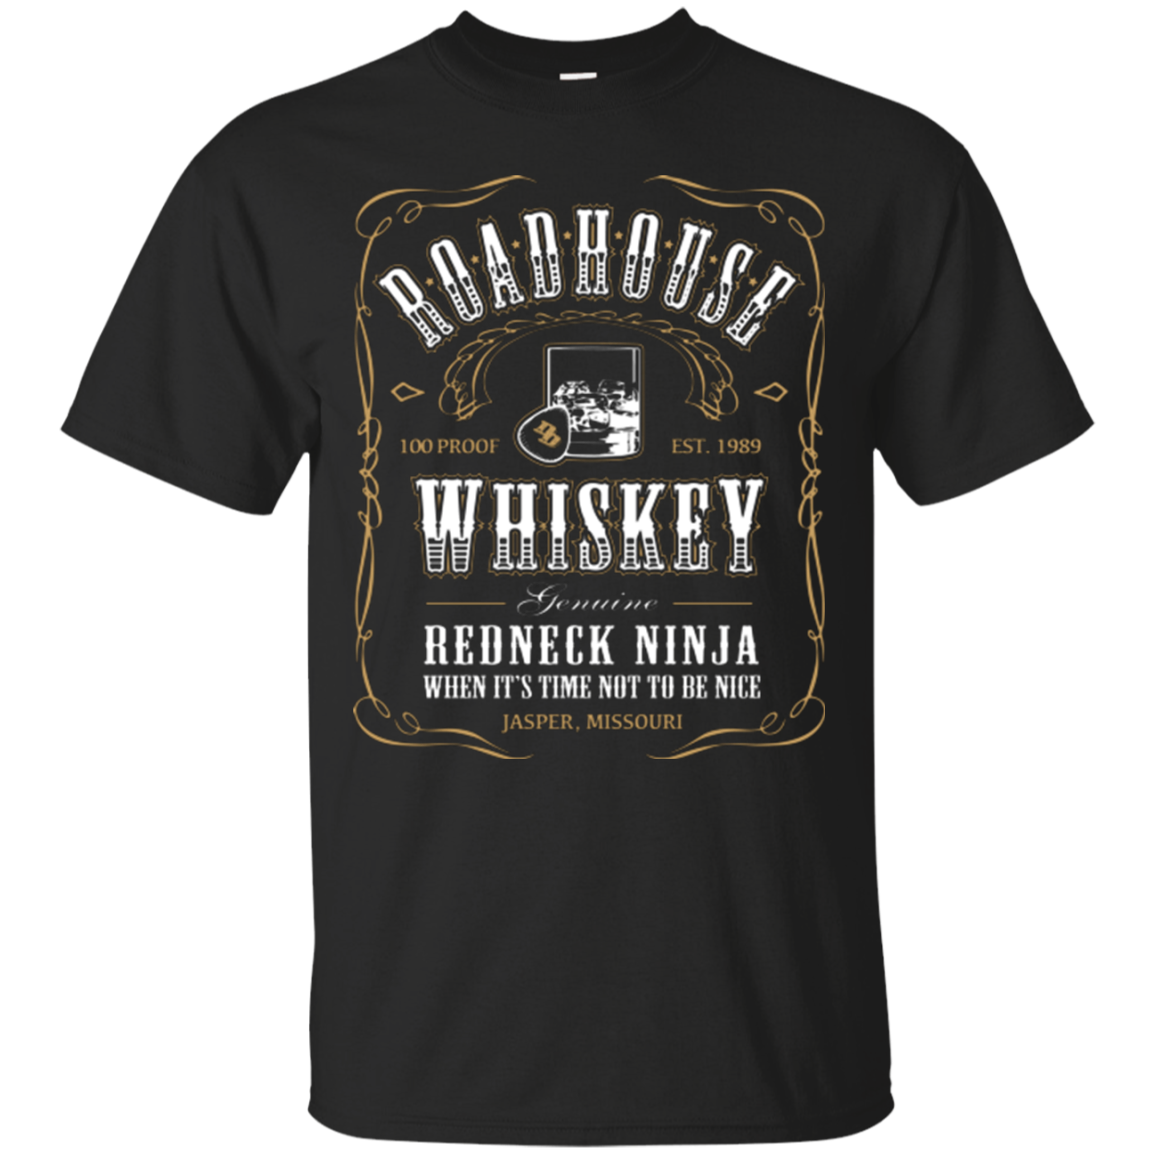 Roadhouse Whiskey T-Shirt